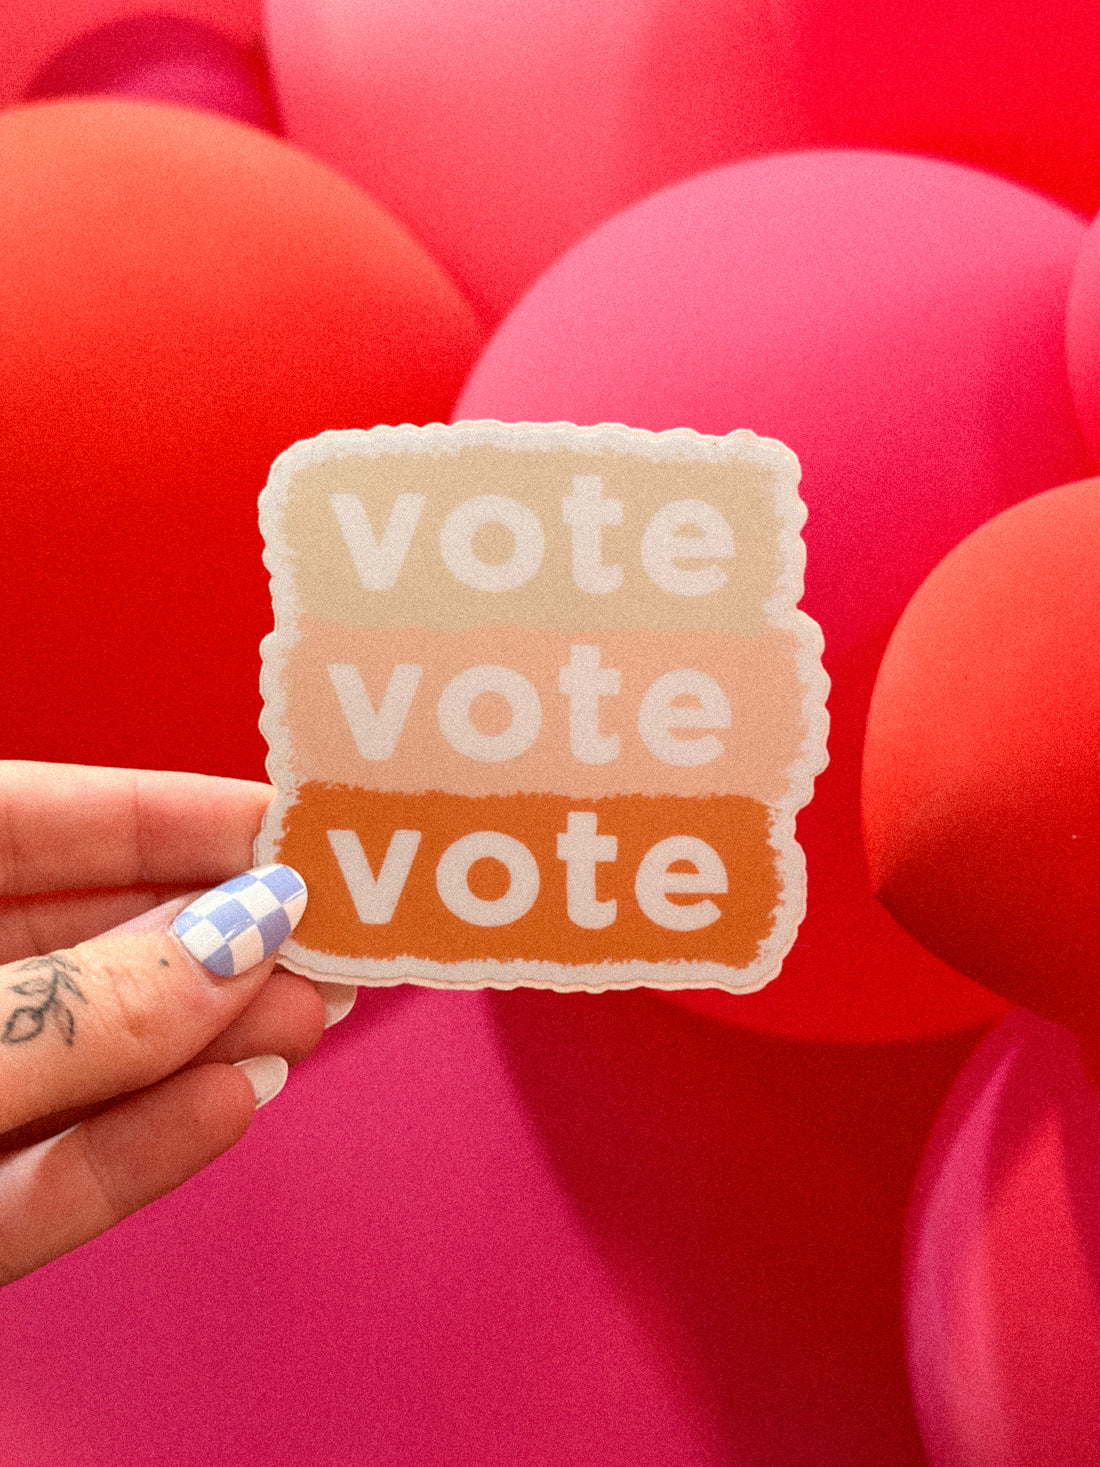 “Vote Vote Vote” Vinyl sticker